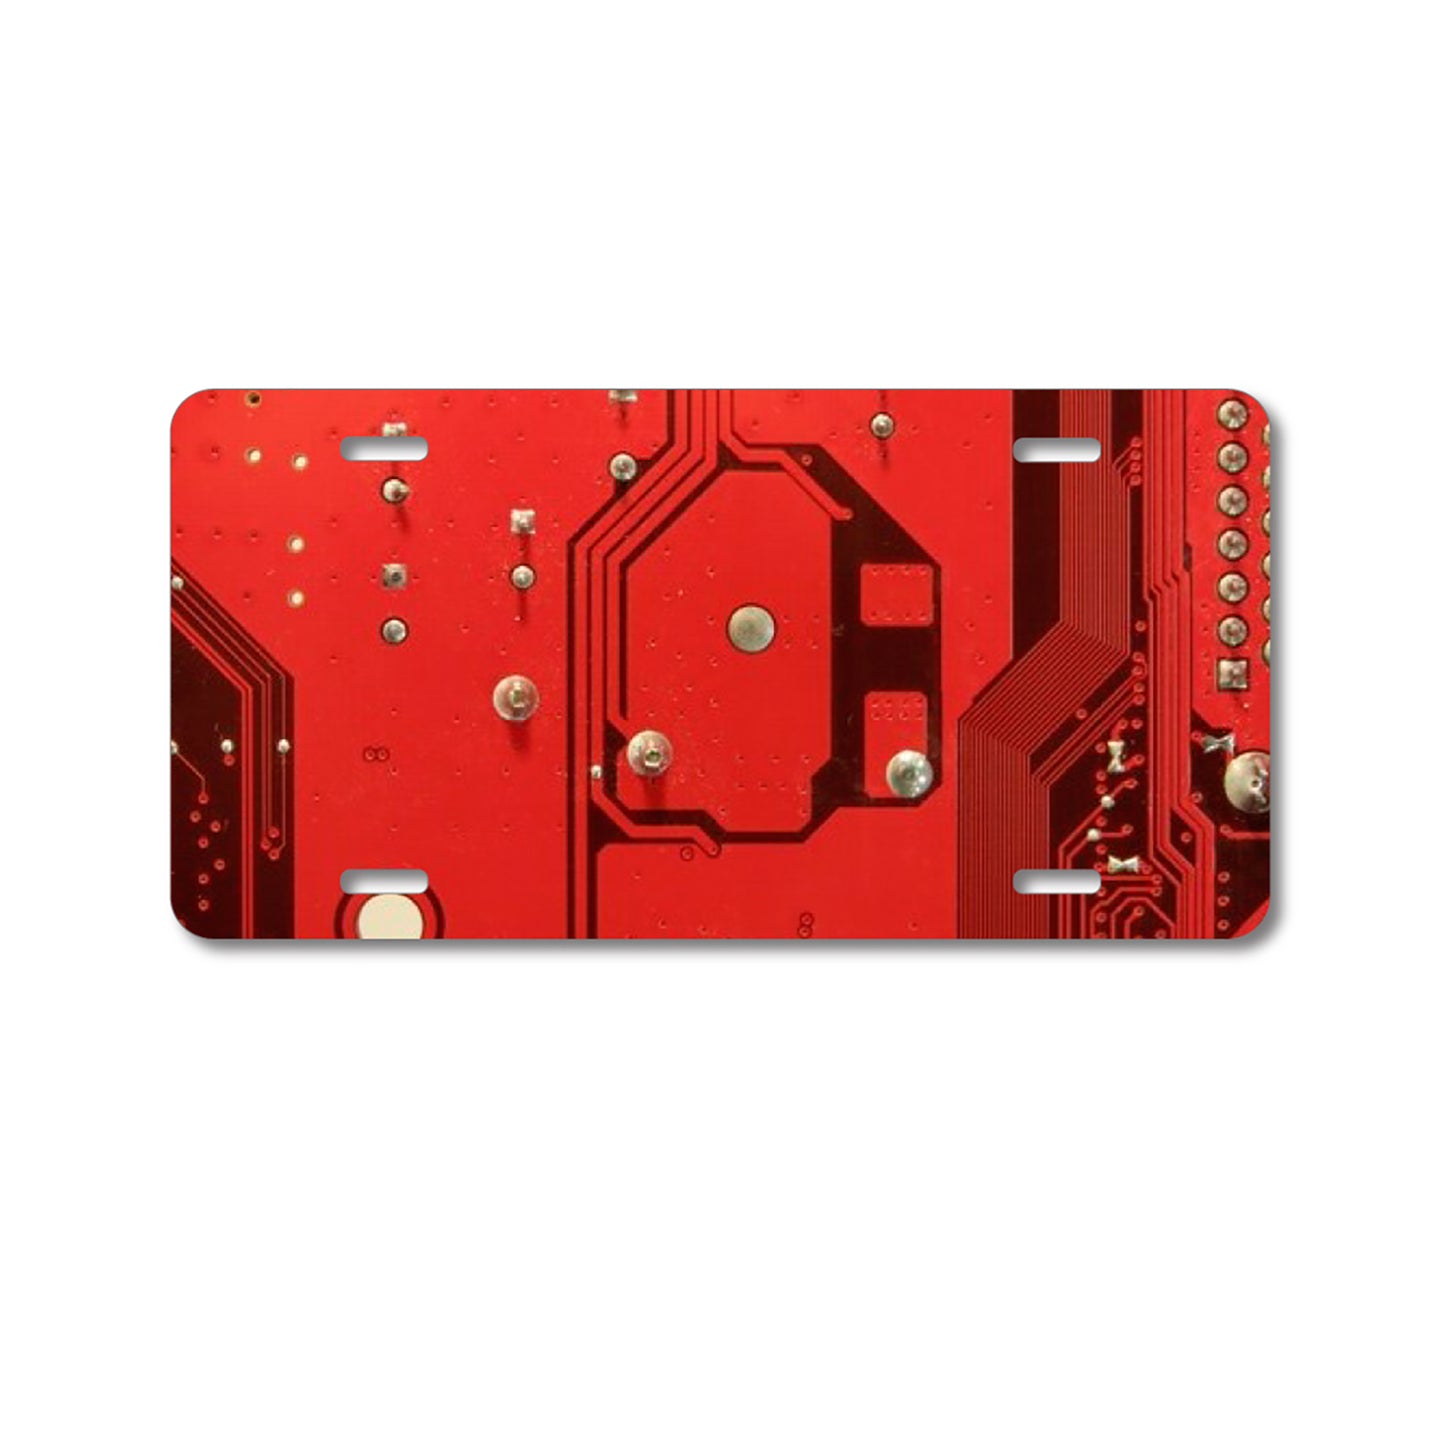 DistinctInk Custom Aluminum Decorative Vanity Front License Plate - Red Circuit Board